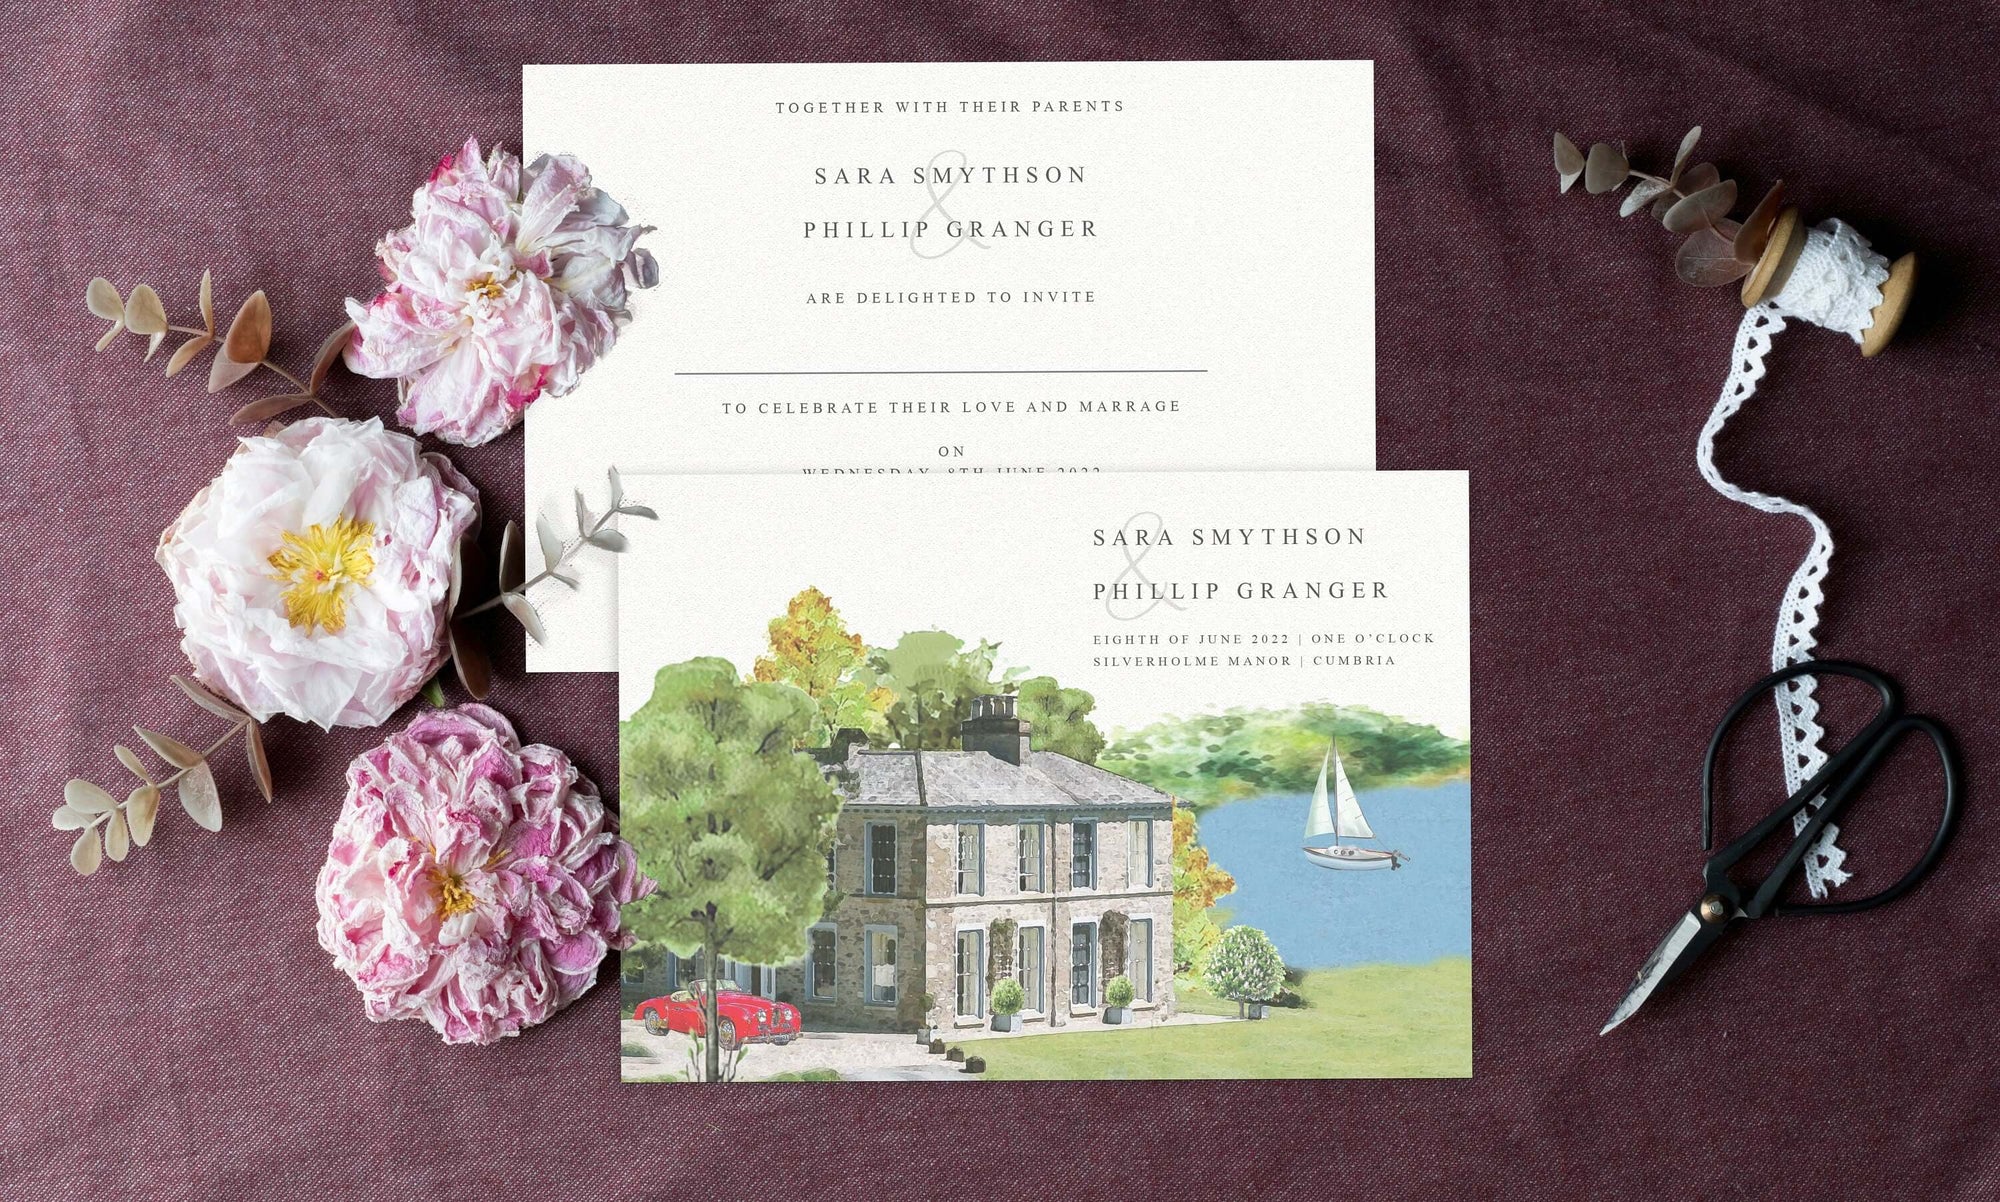 Silverholme Manor wedding invitation from Mustard and Gray